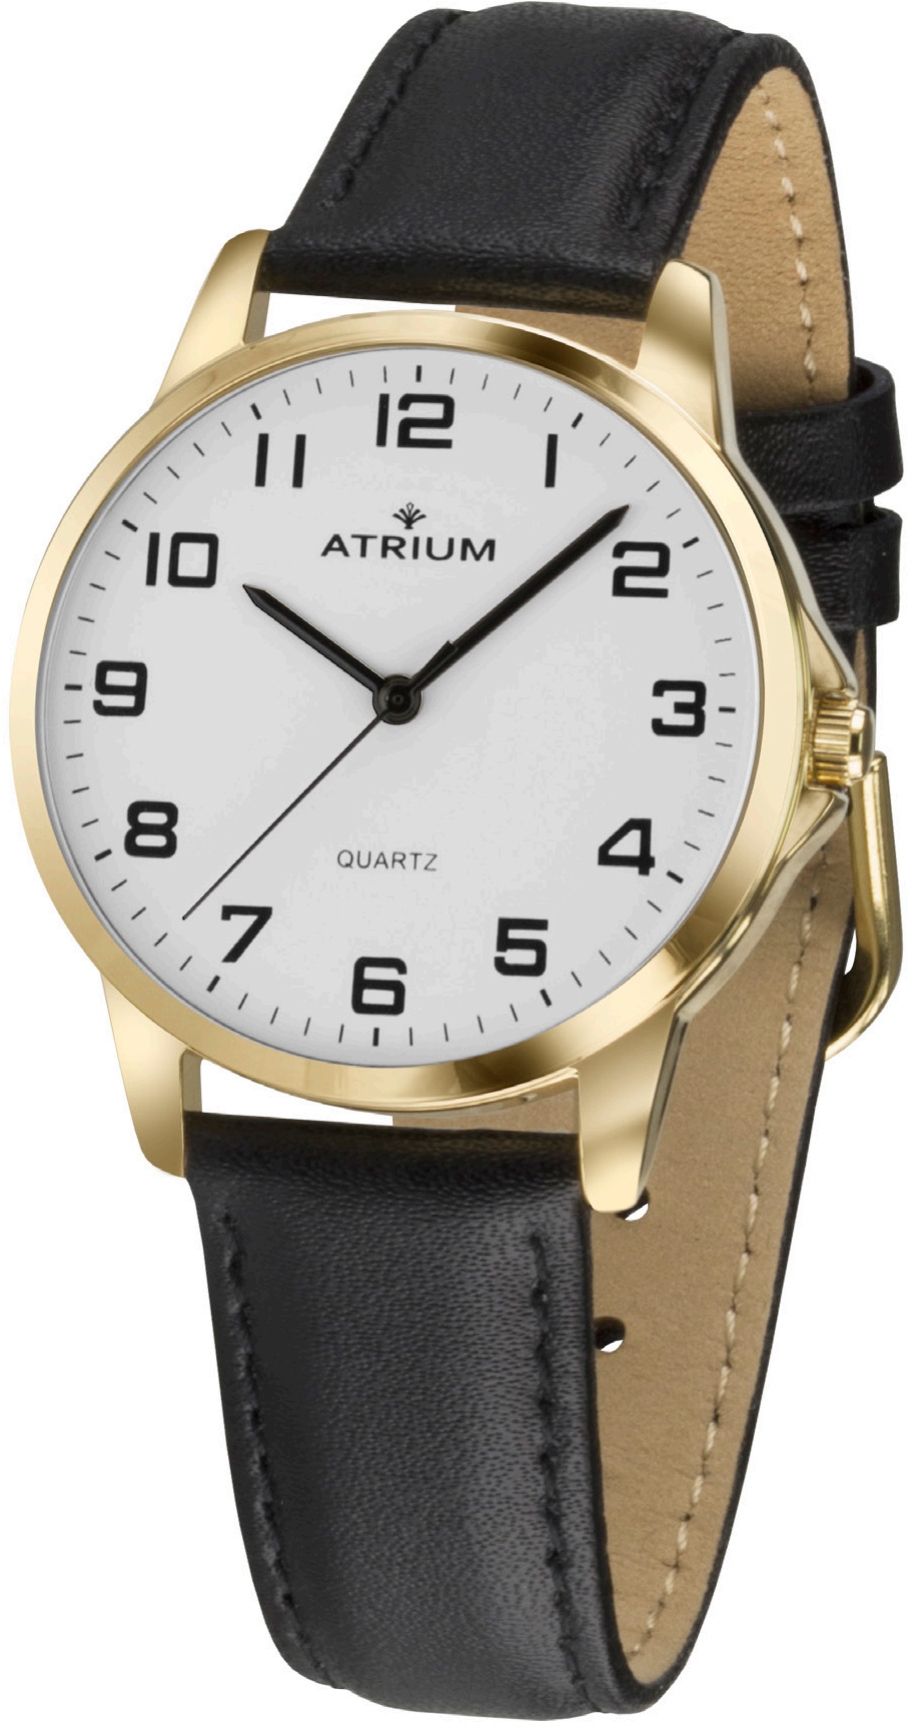 ATRIUM Watch - Men's - Black leather - Goldtoned - A36-20